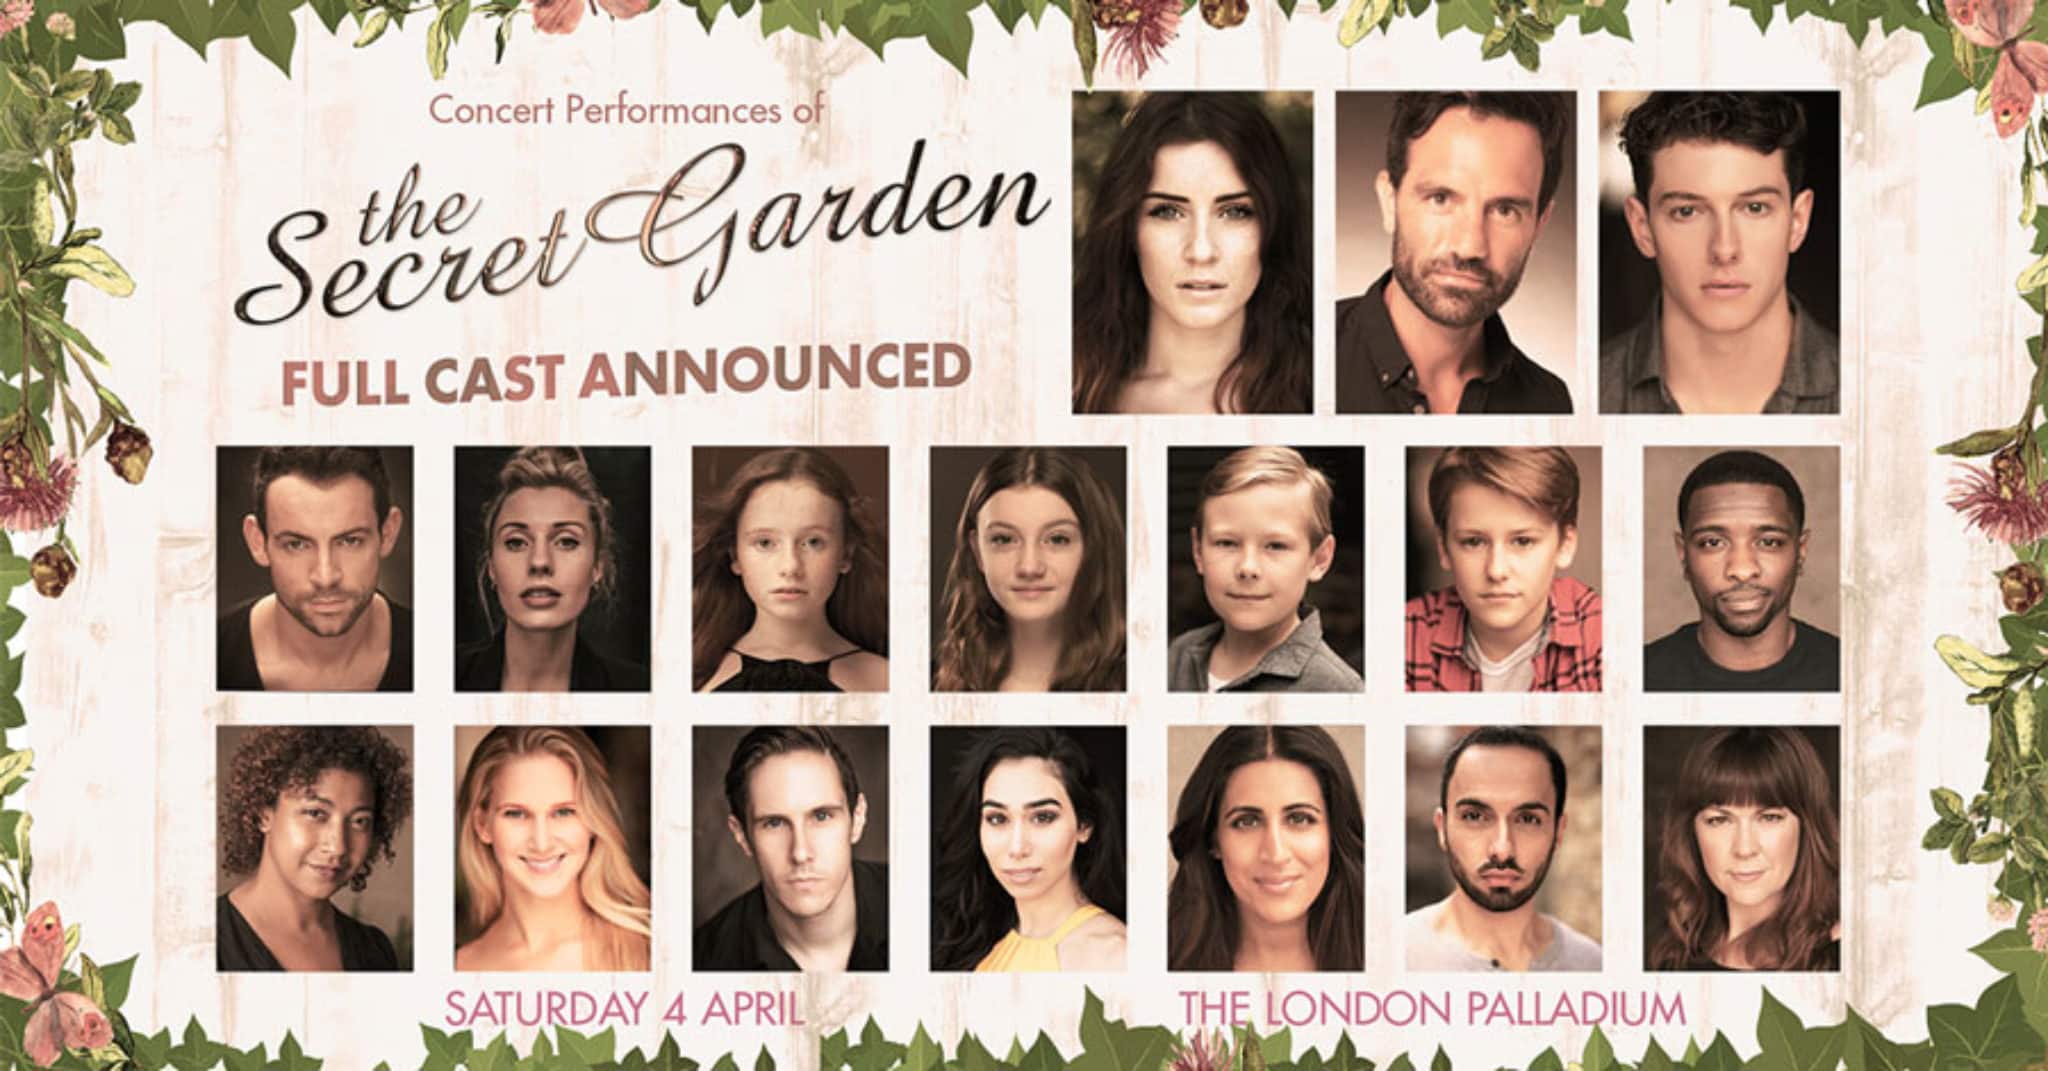 Full casting announced for The Secret Garden in concert at Palladium